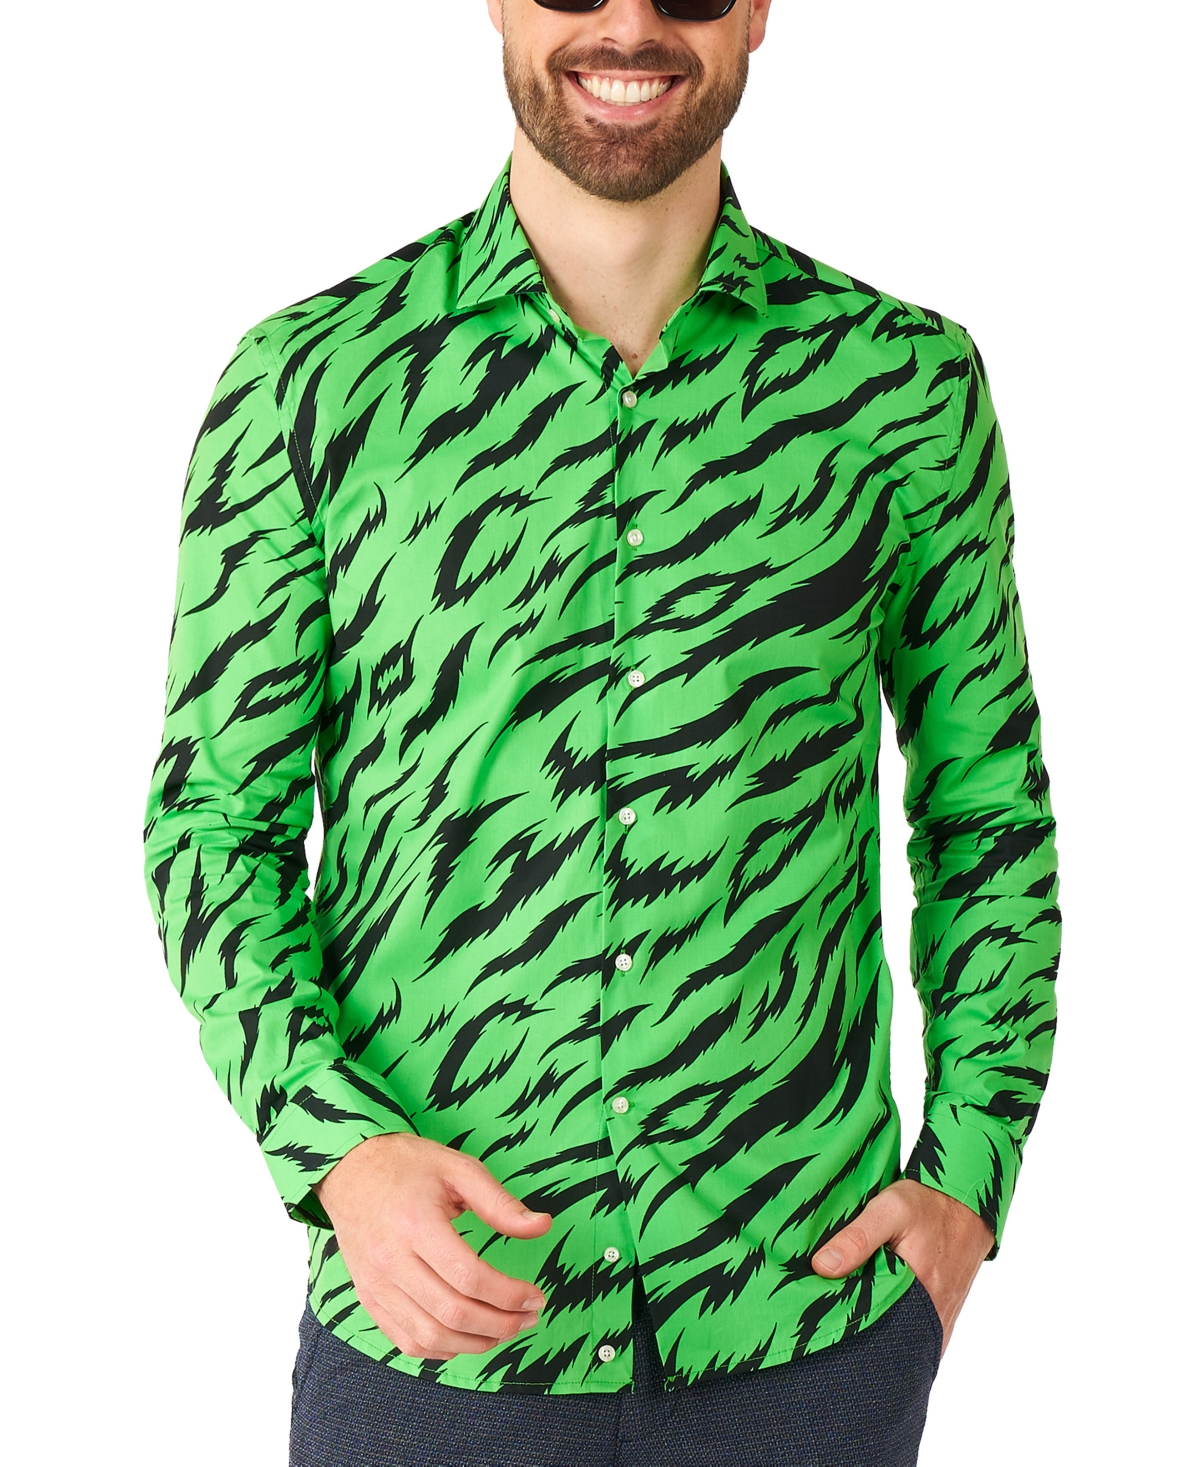 Men's Long-Sleeve Wild Animal Graphic Shirt - Green